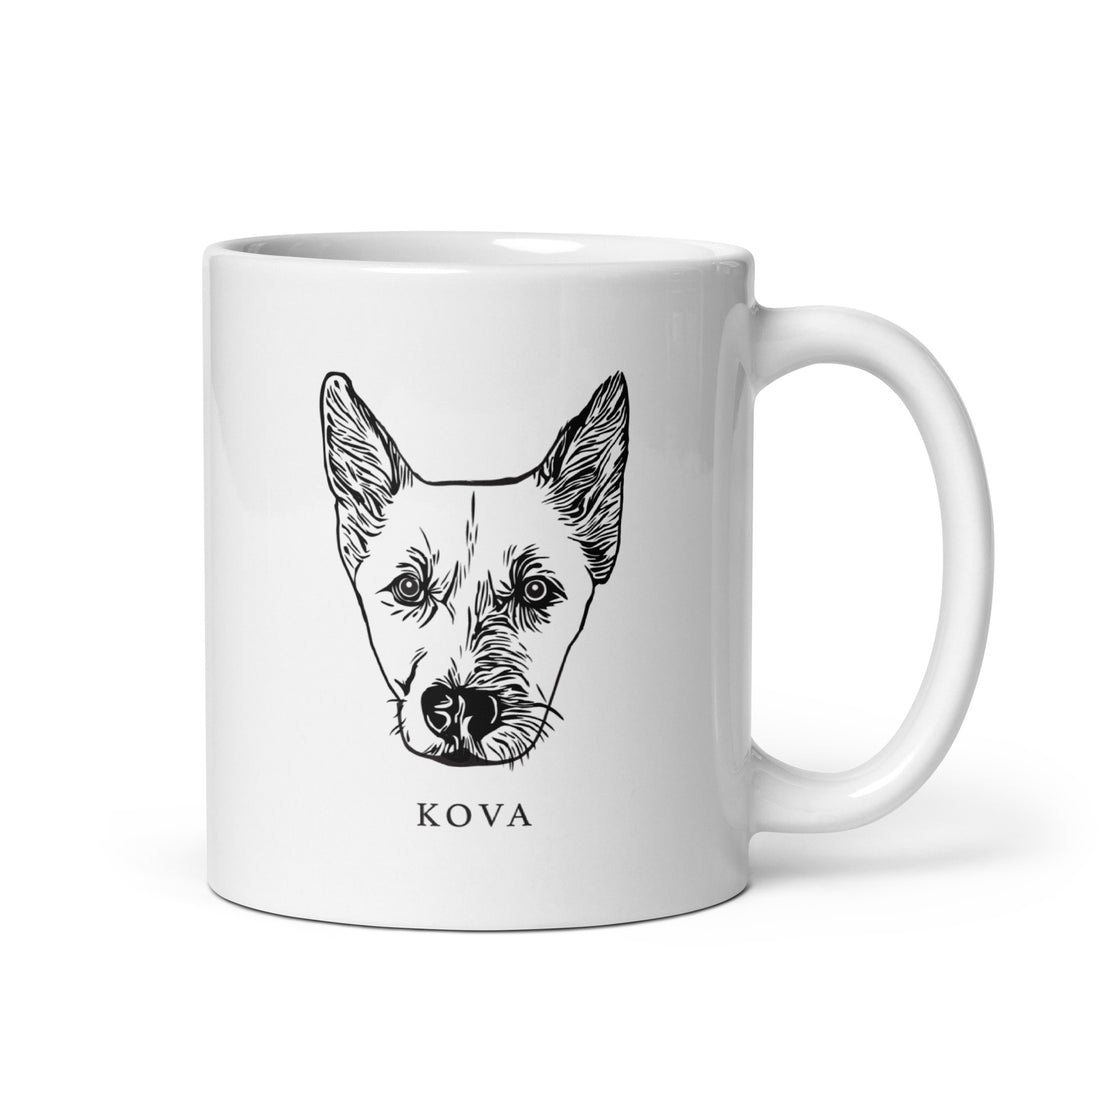 Custom Pet Mug | Custom Dog Mug | Dog Coffee Mug | Dog Mug | Dog Mom Mug | Custom Dog Coffee Mug | Wagged Tails